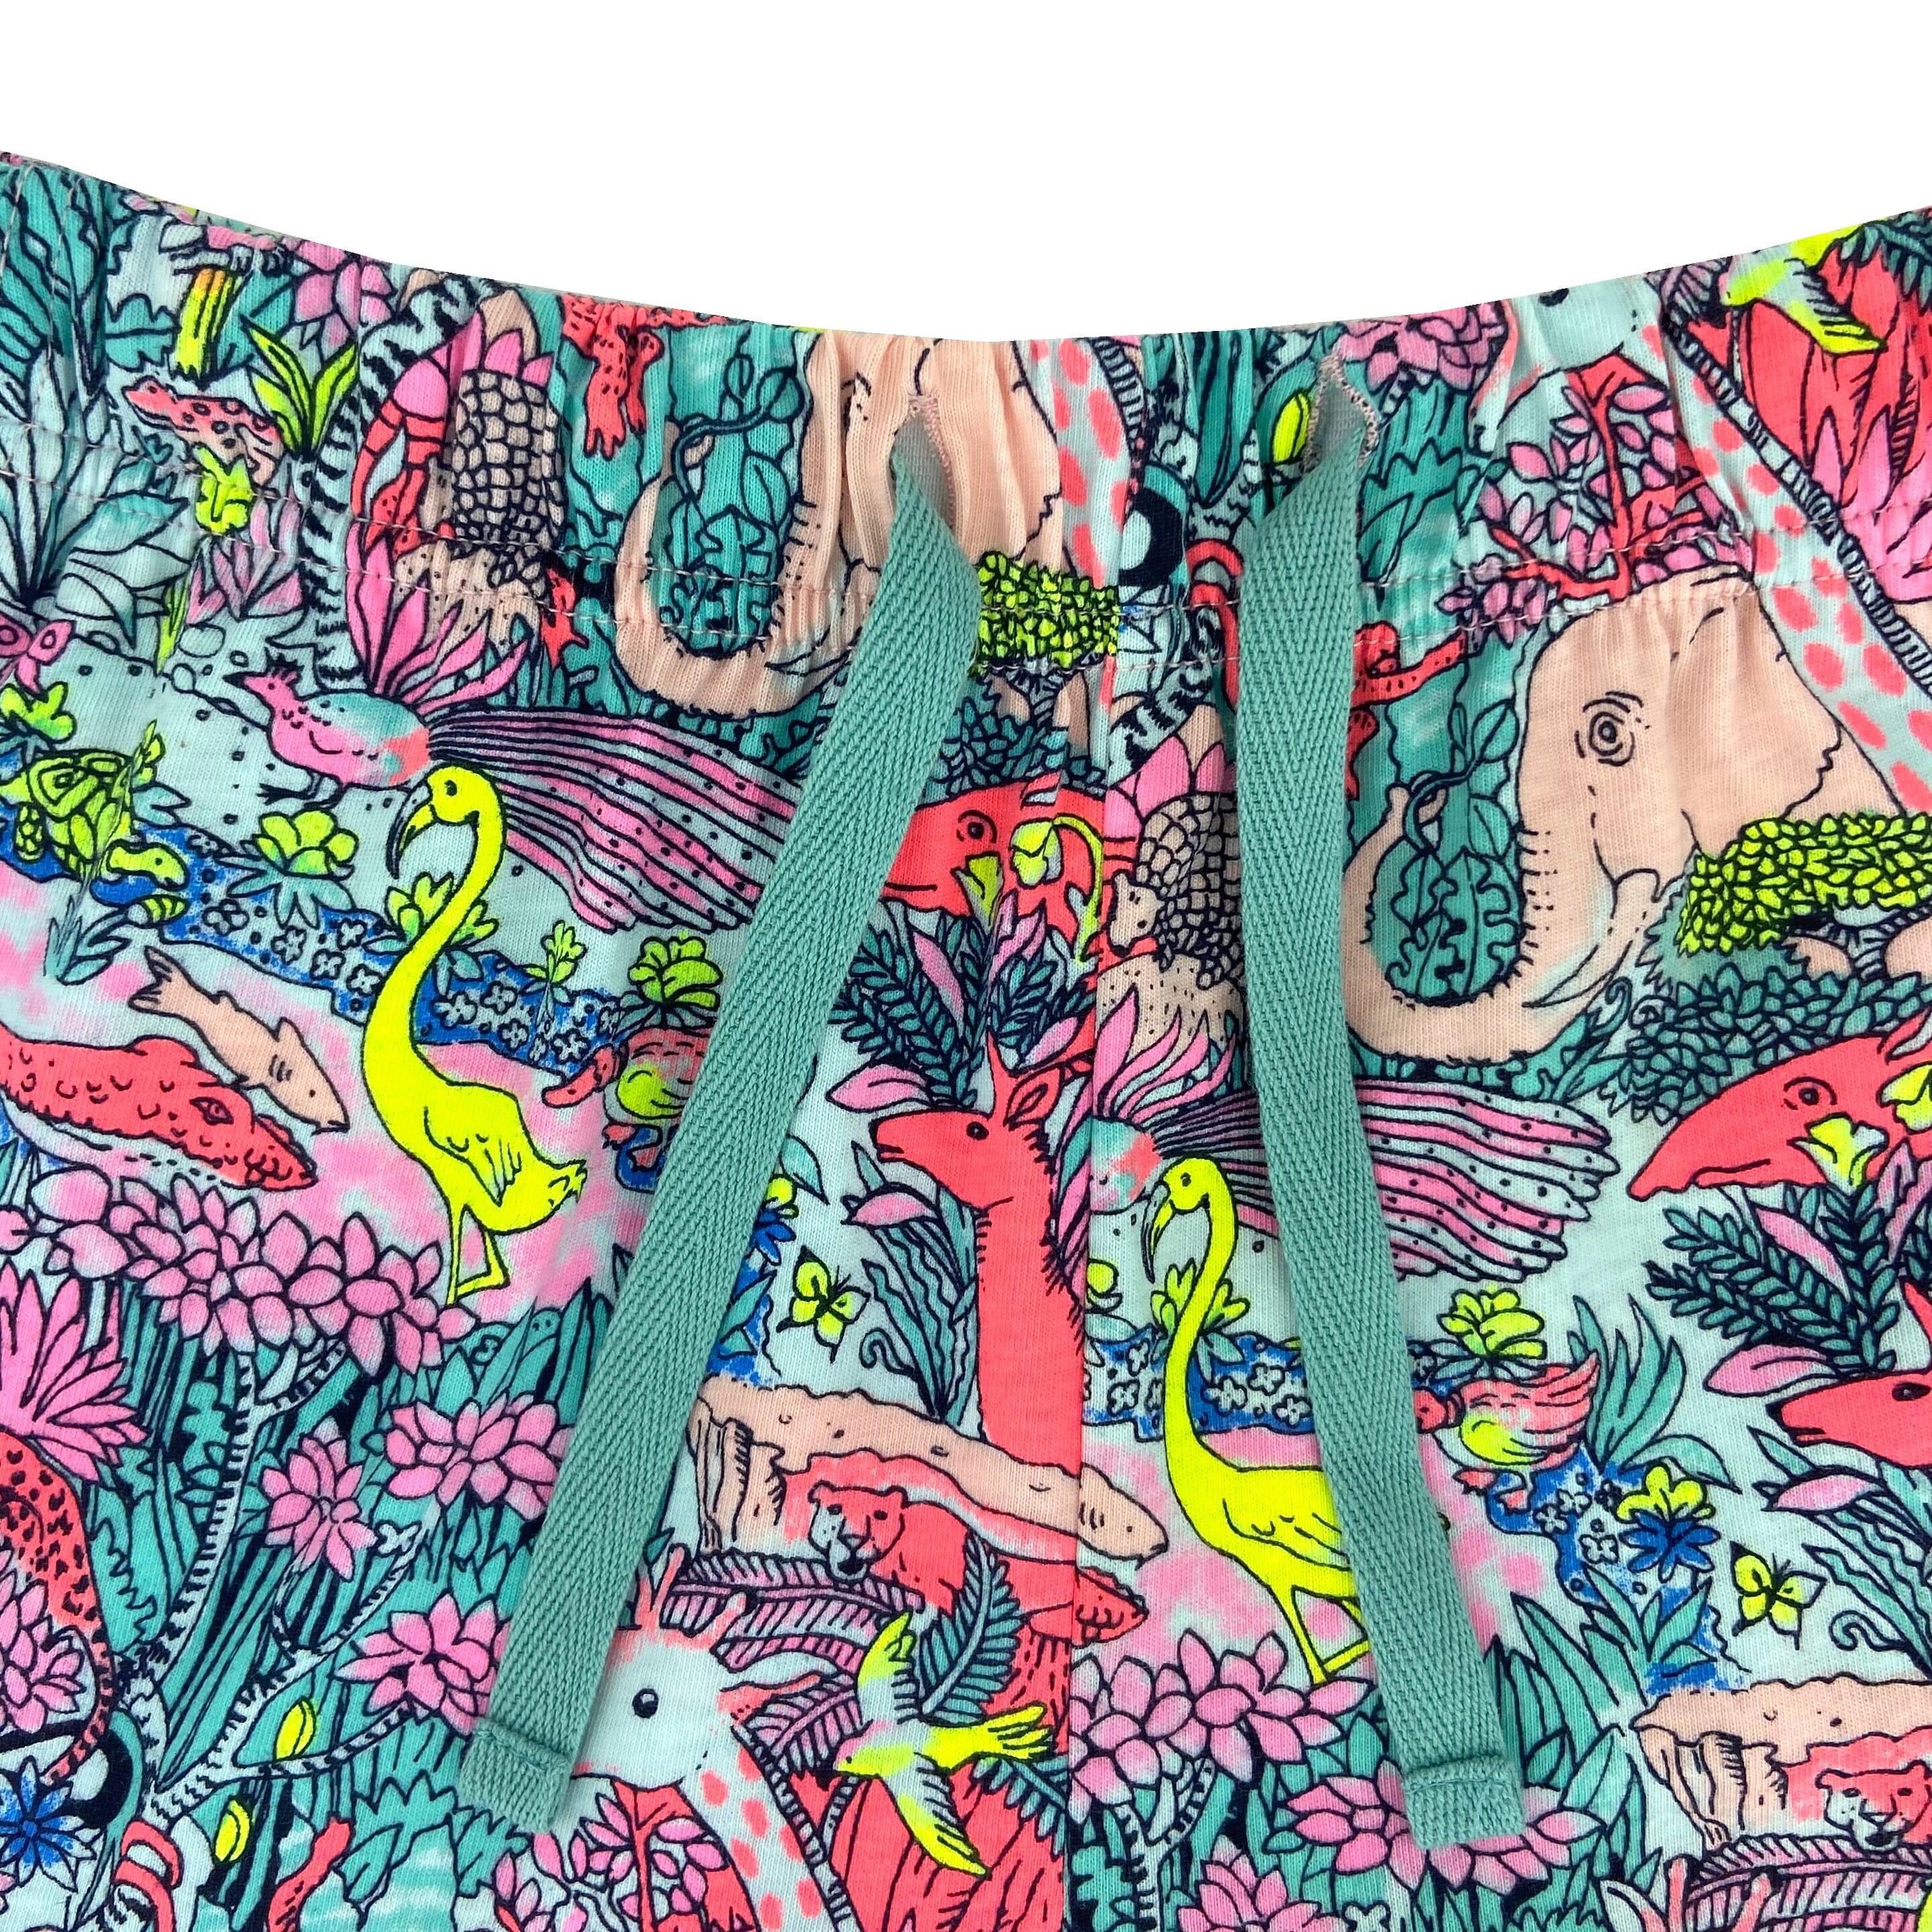 Women's Colorful Jungle Animal Novelty Print Cotton Knit Pyjama Shorts